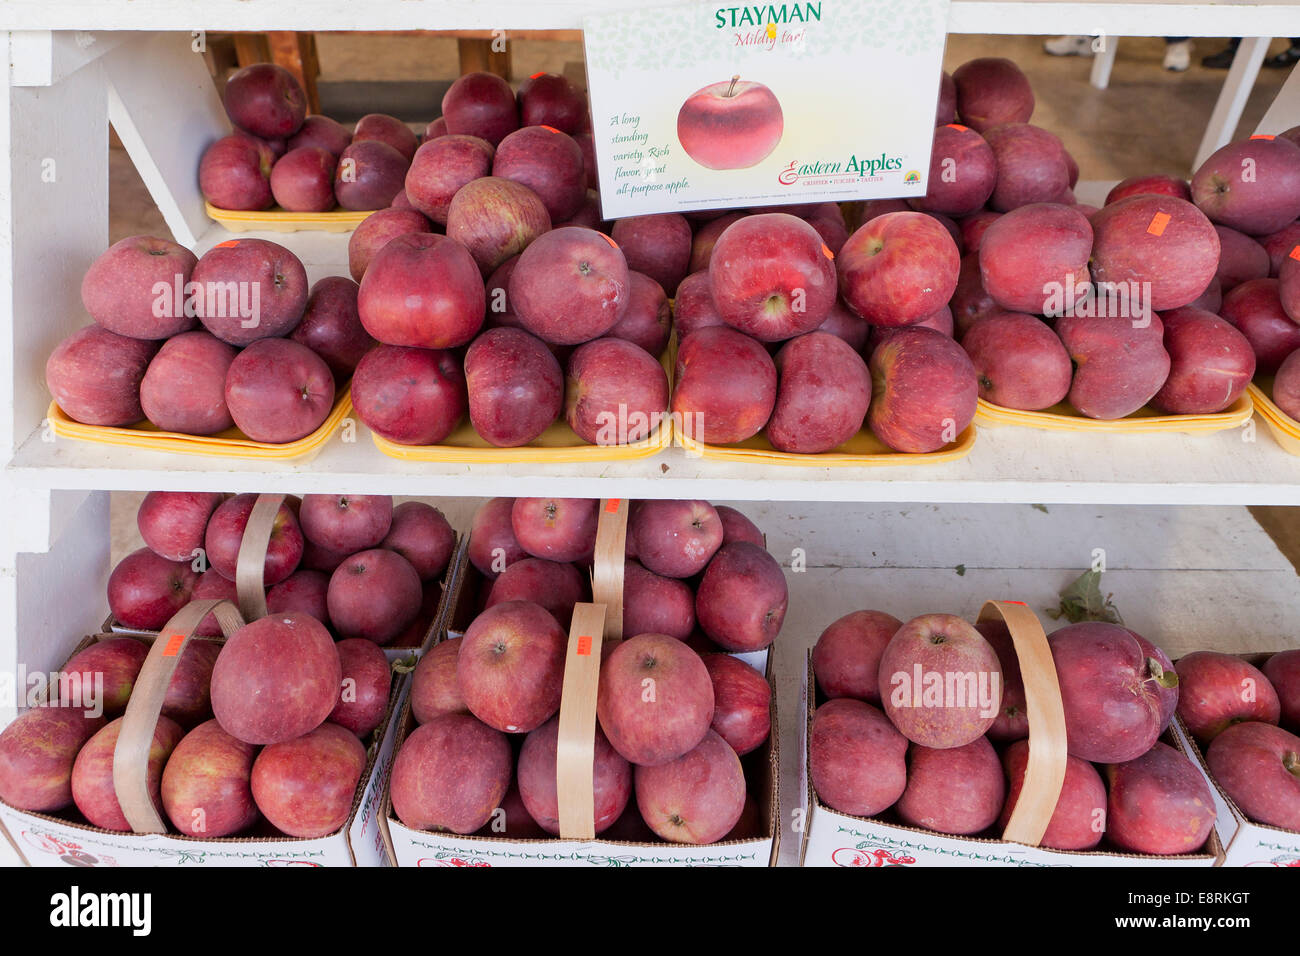 Fresh picked Stayman apples at farmers market - Pennsylvania USA Stock Photo